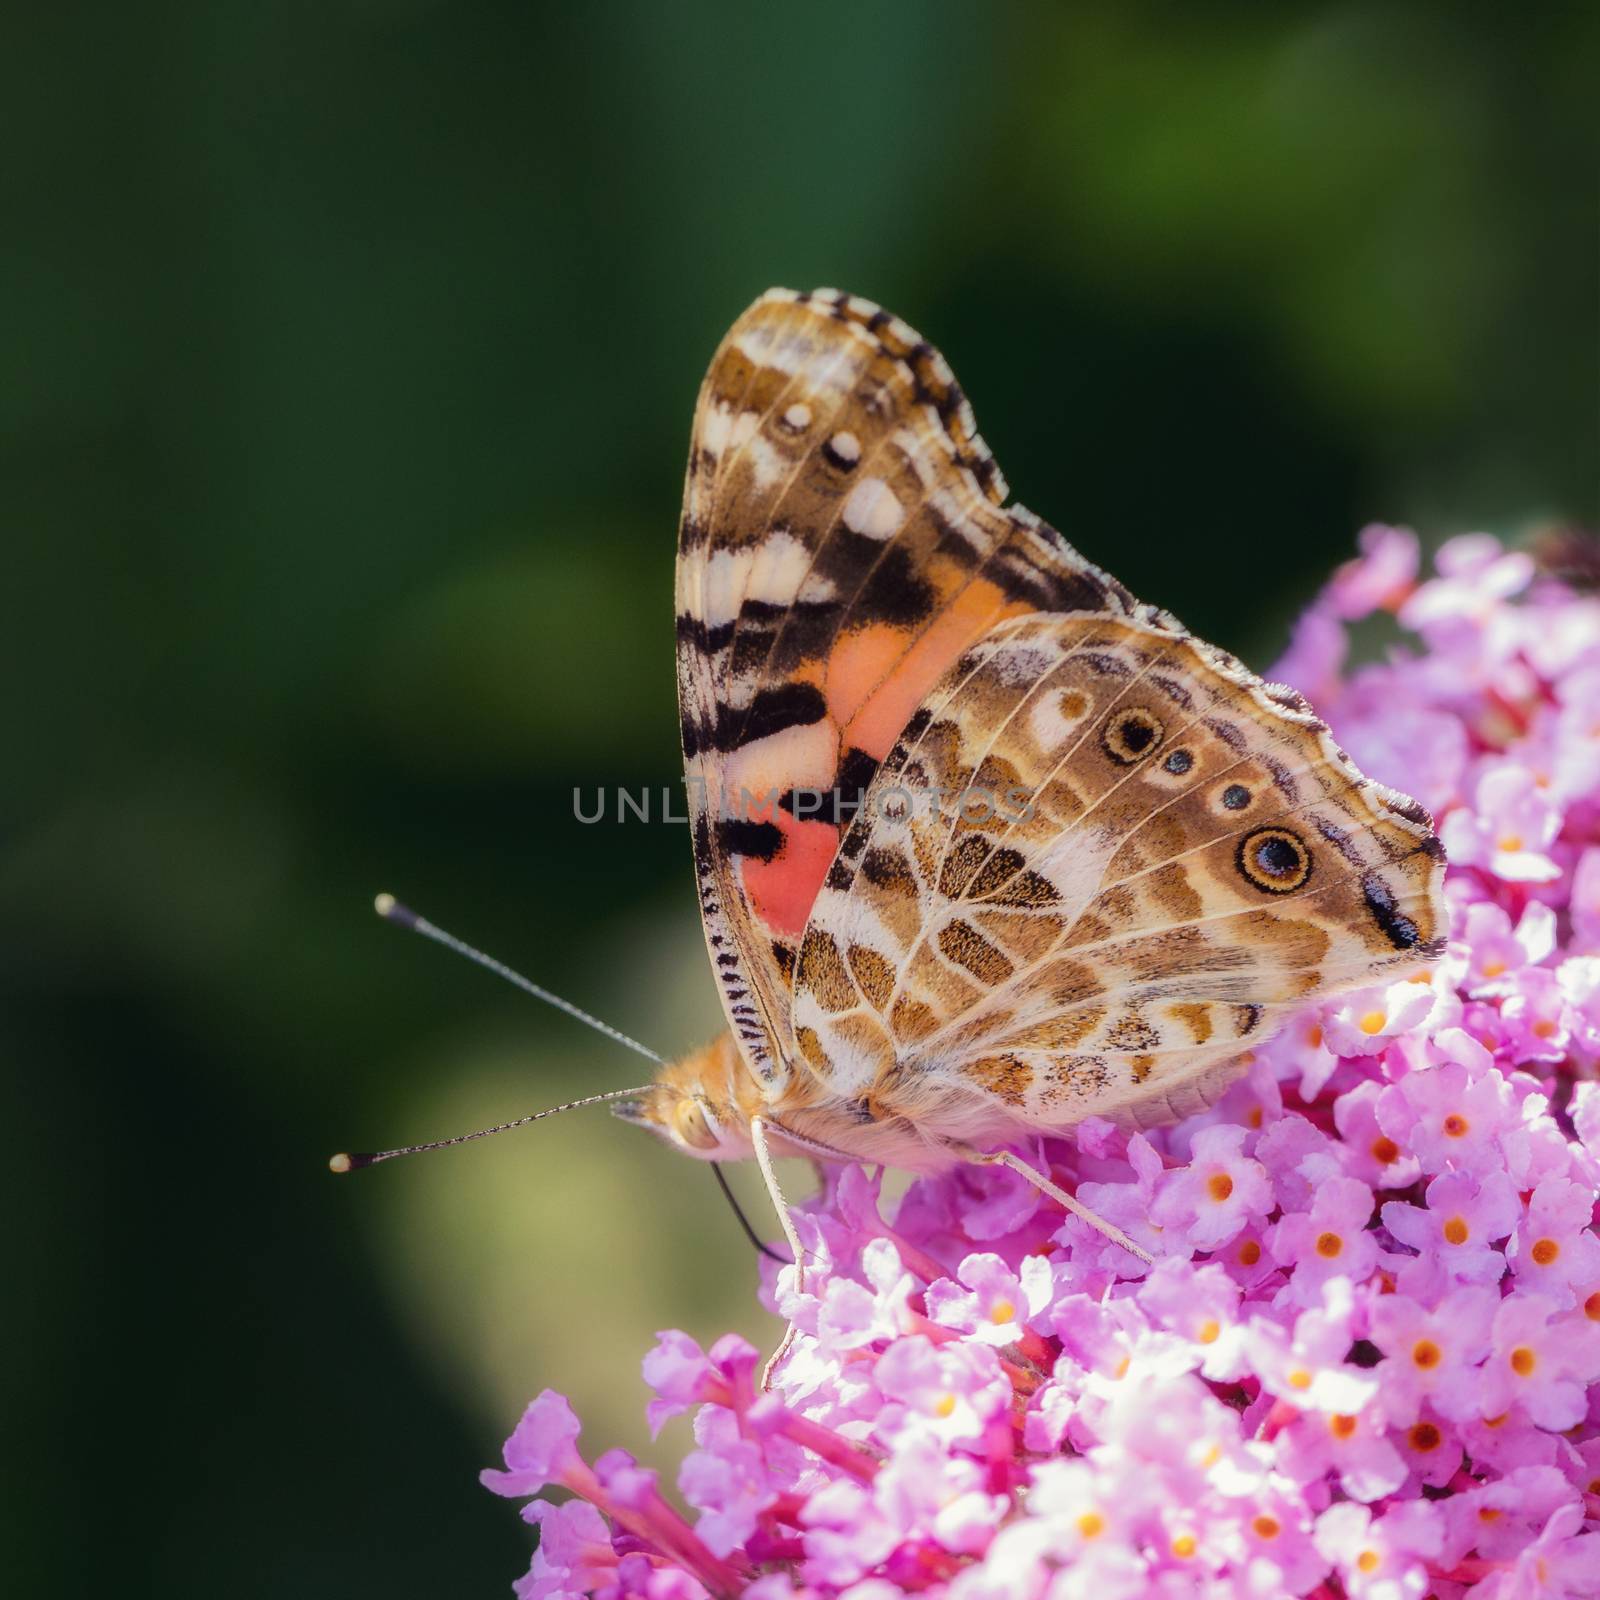 Butterfly on a flower by sandra_fotodesign